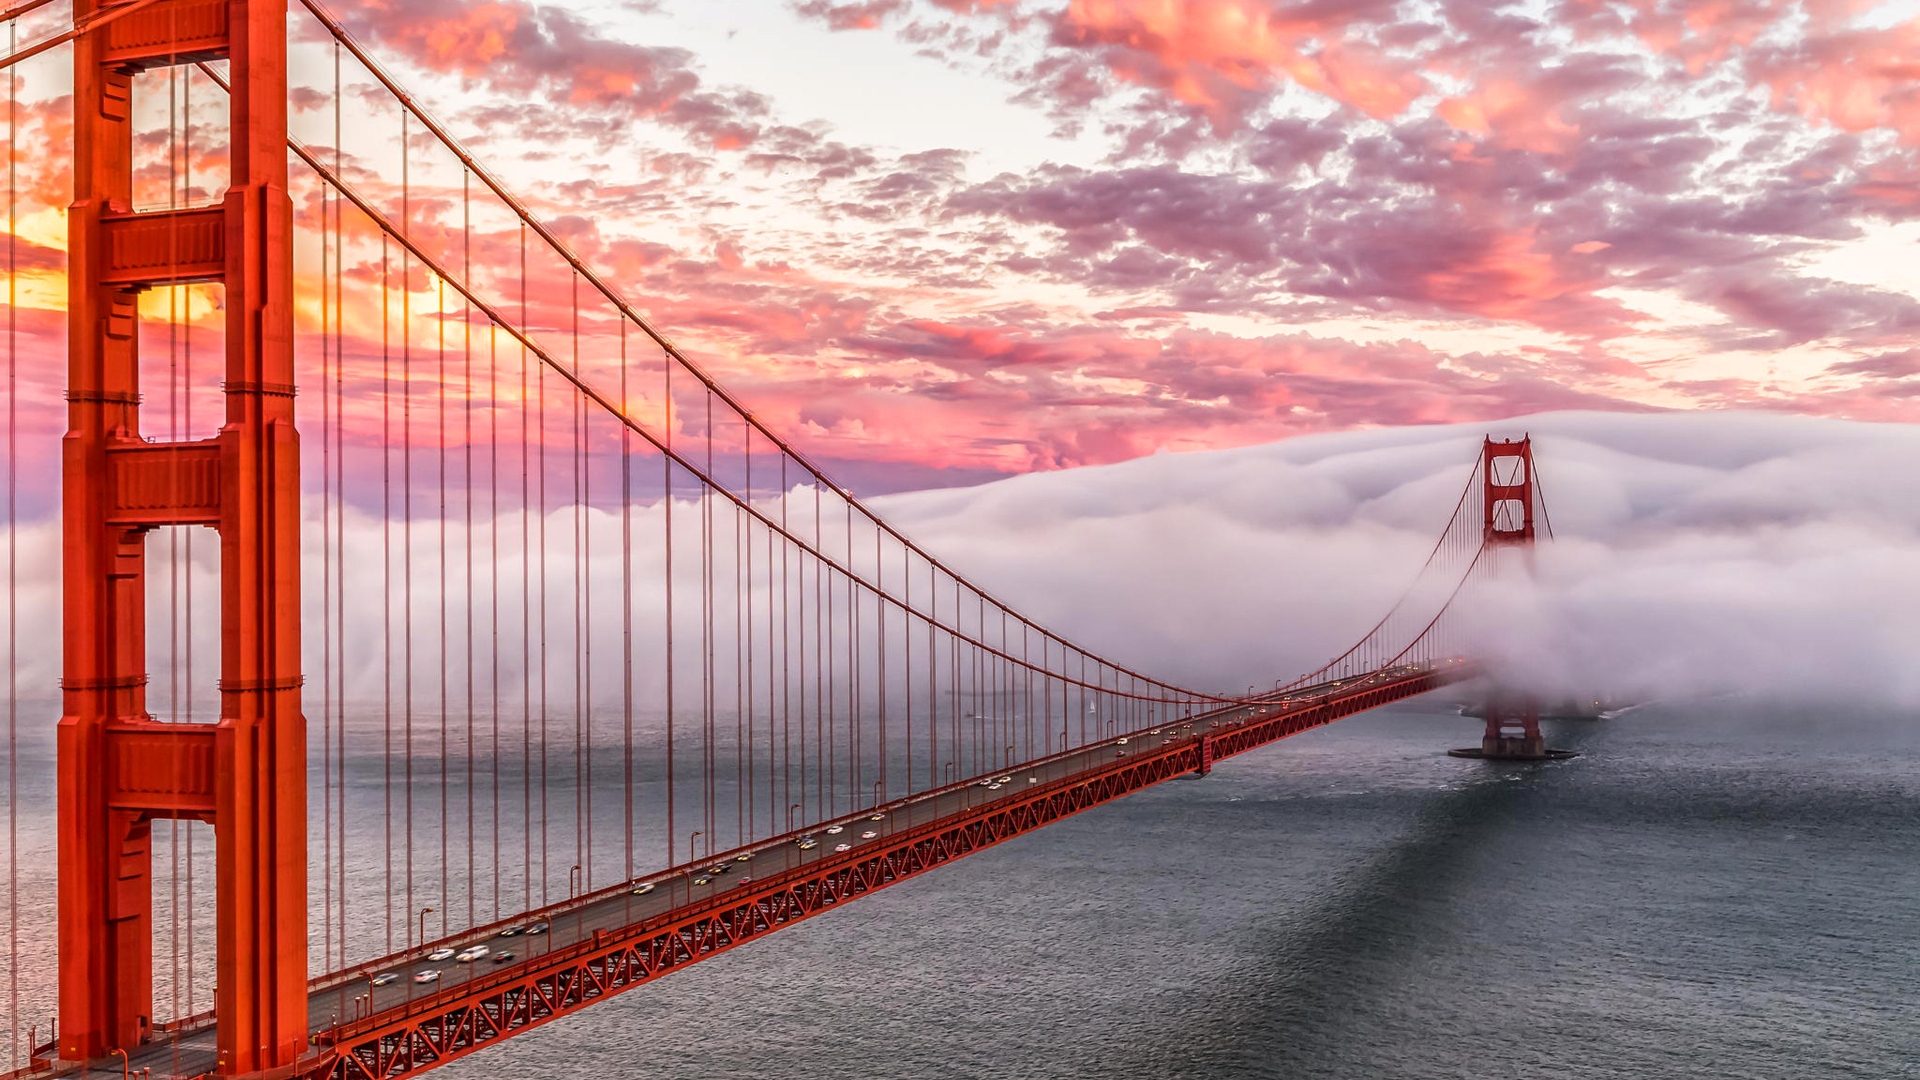 Golden Gate Bridge in San Francisco for 1920 x 1080 HDTV 1080p resolution